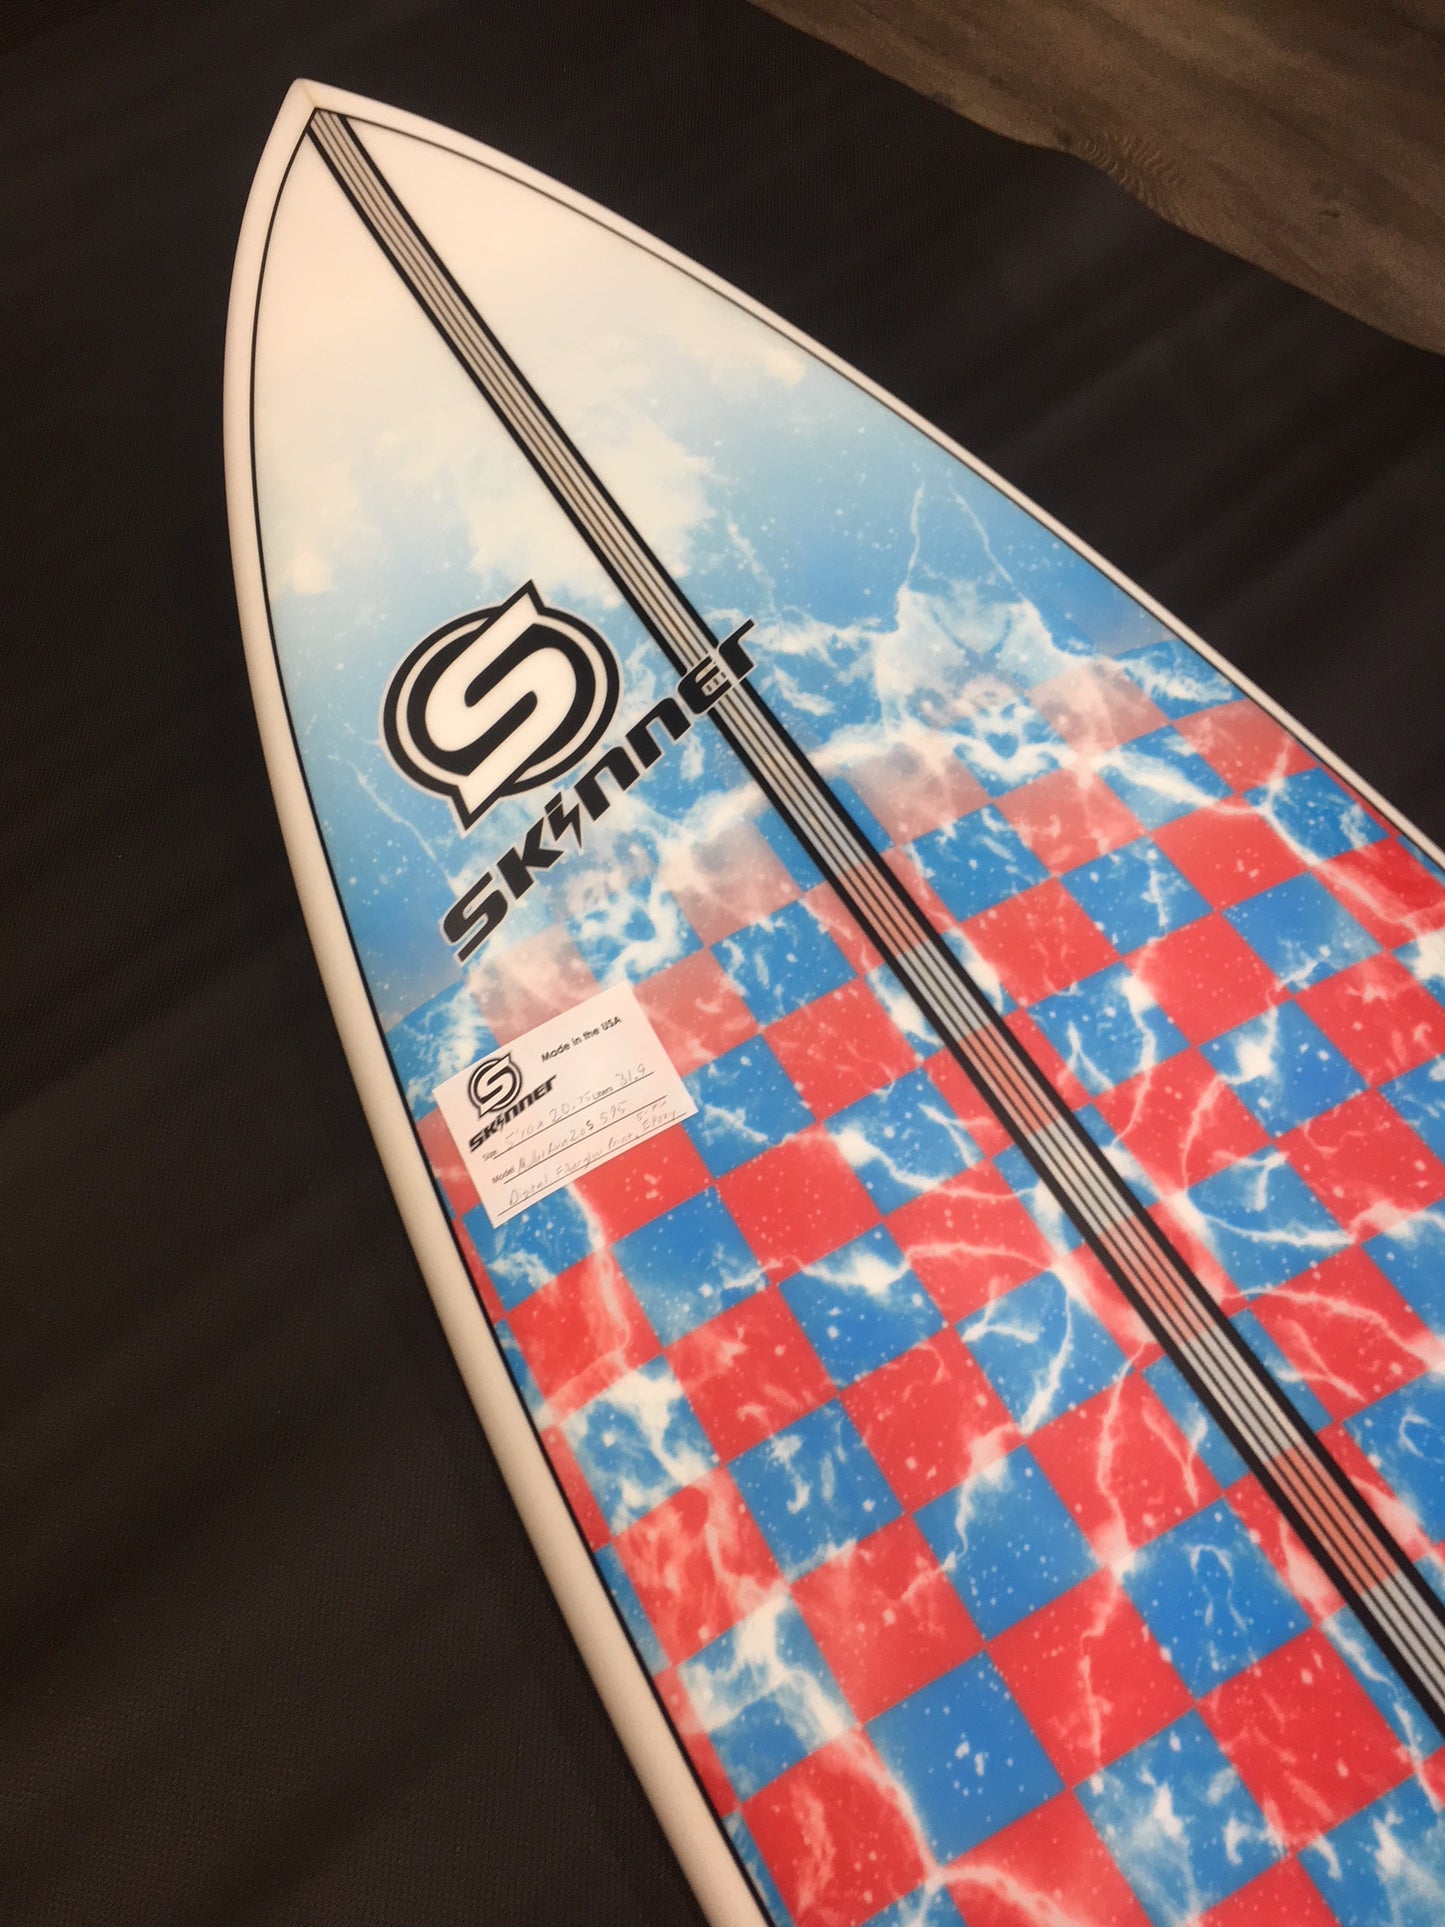 SOLD Skinner Surfboards 5'10 x 20.75 Mullet Run 2.0 Epoxy Custom Tie Dye Checker Print Surfboard